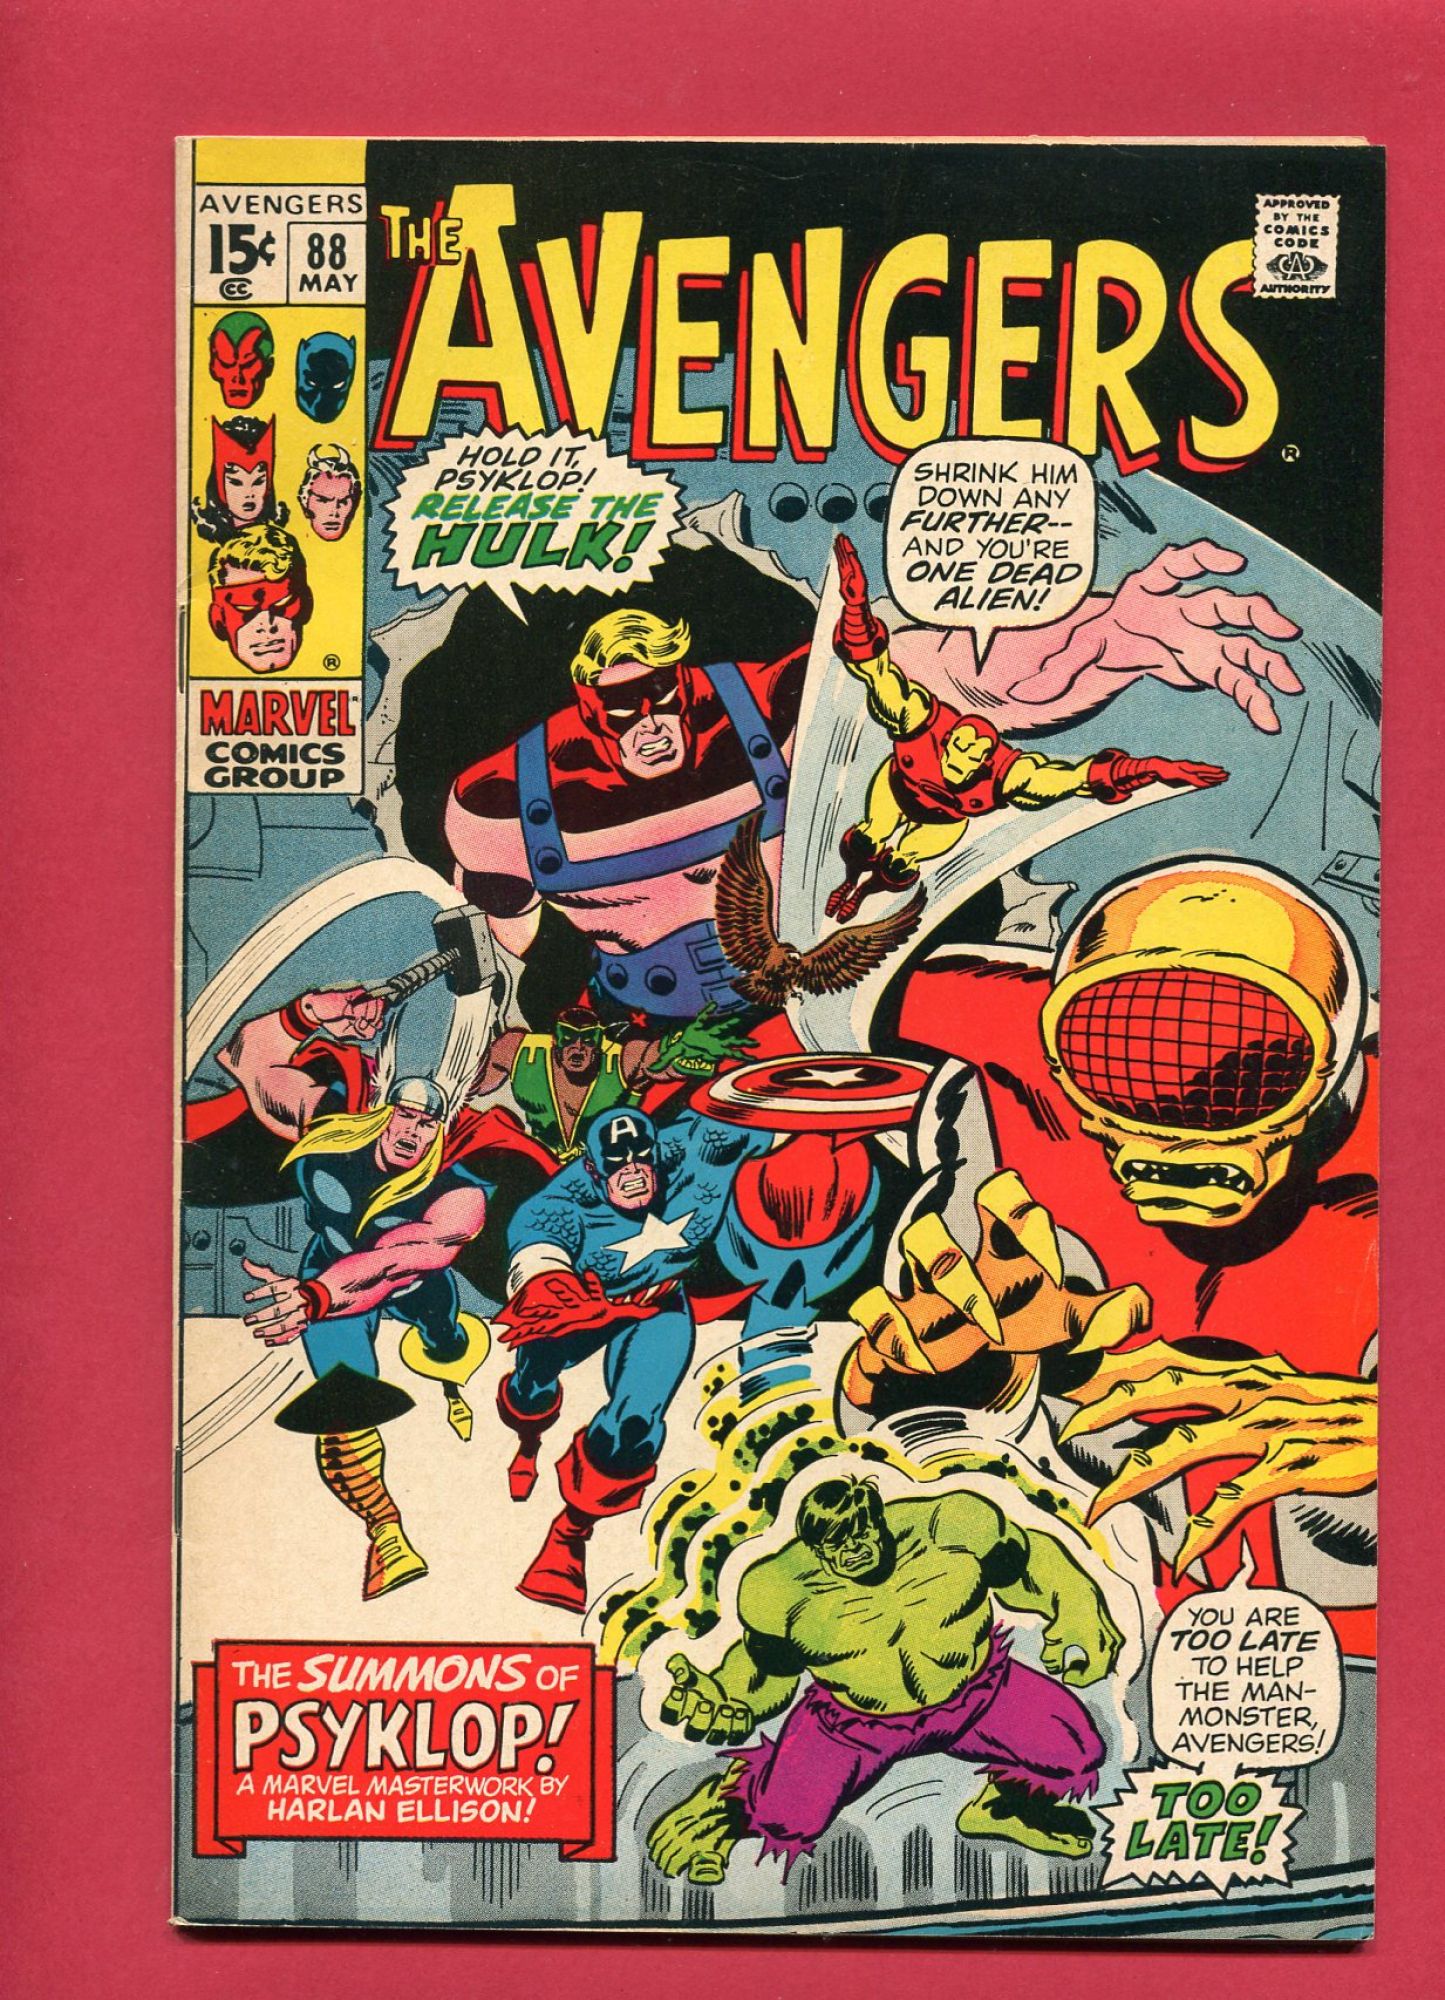 Avengers #88, May 1971, 7.0 FN/VF